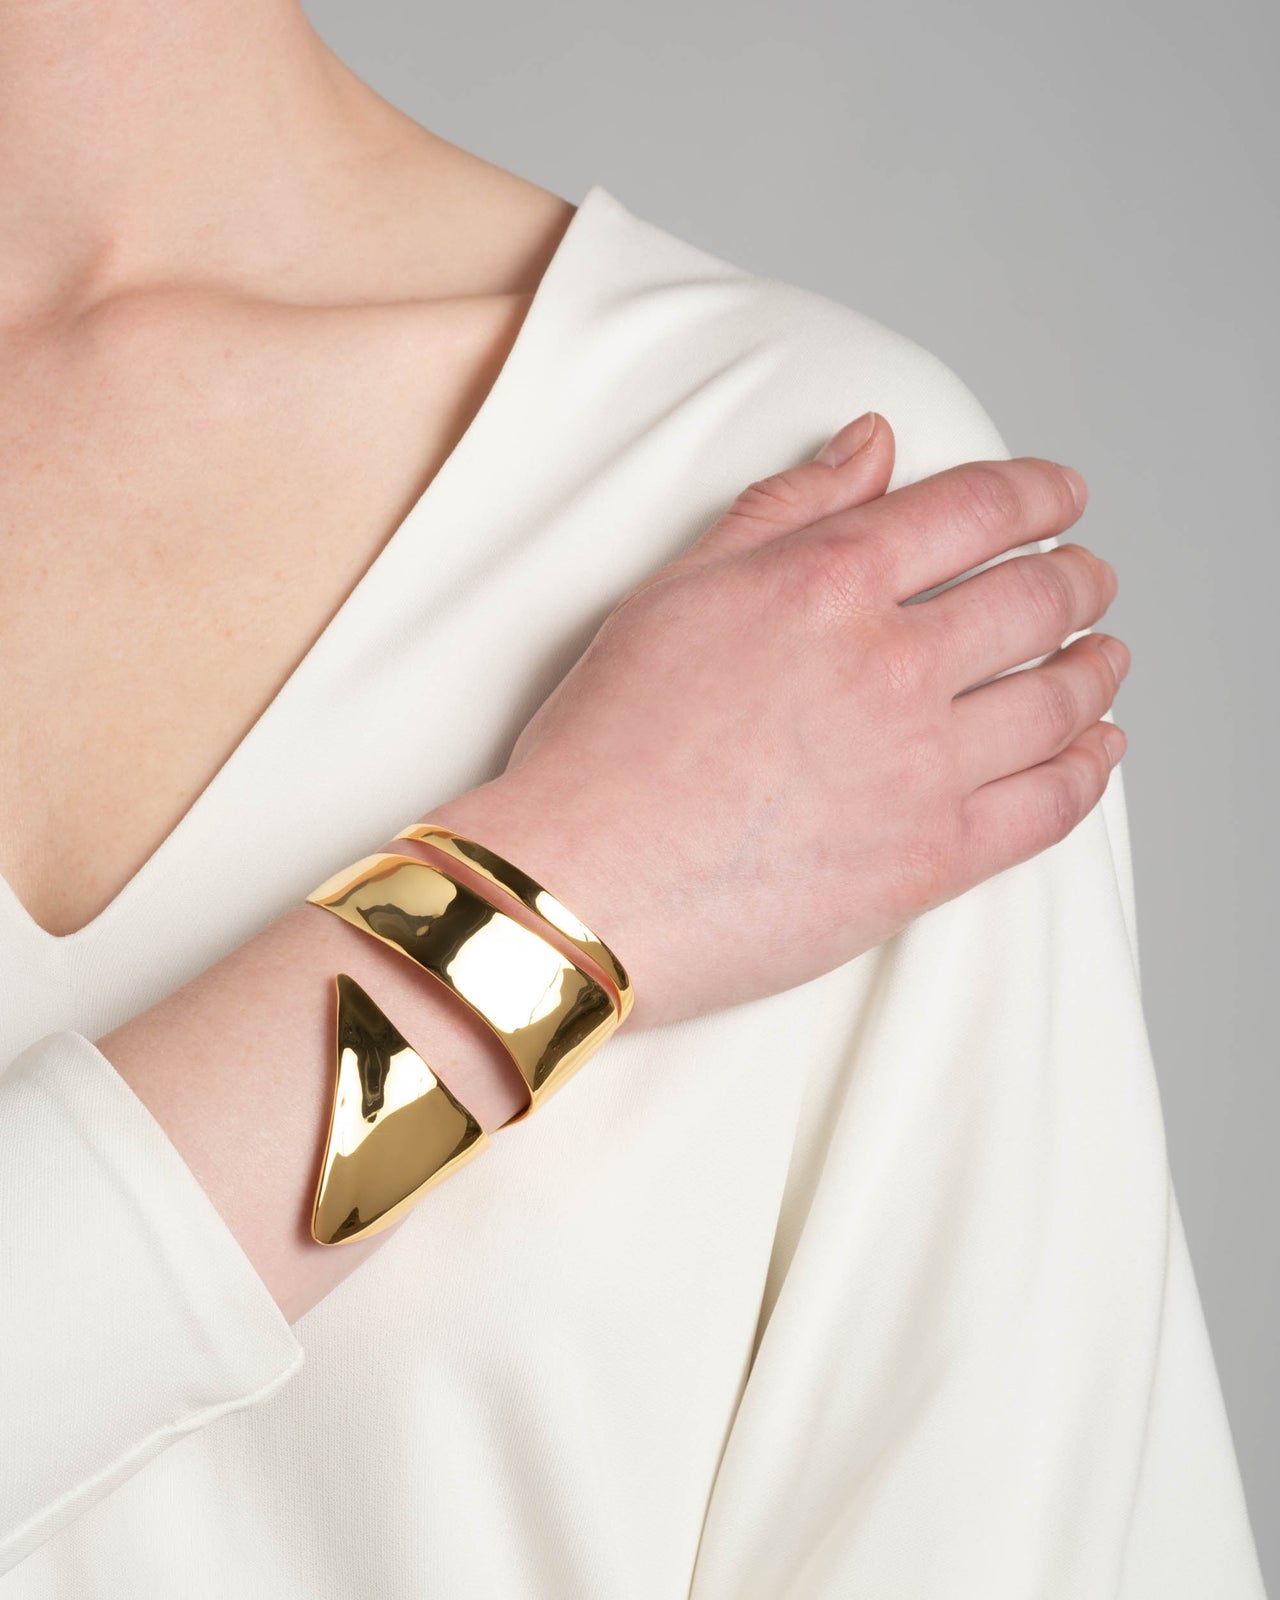 Molten Gold Armor Cuff Bracelet - Photo 2